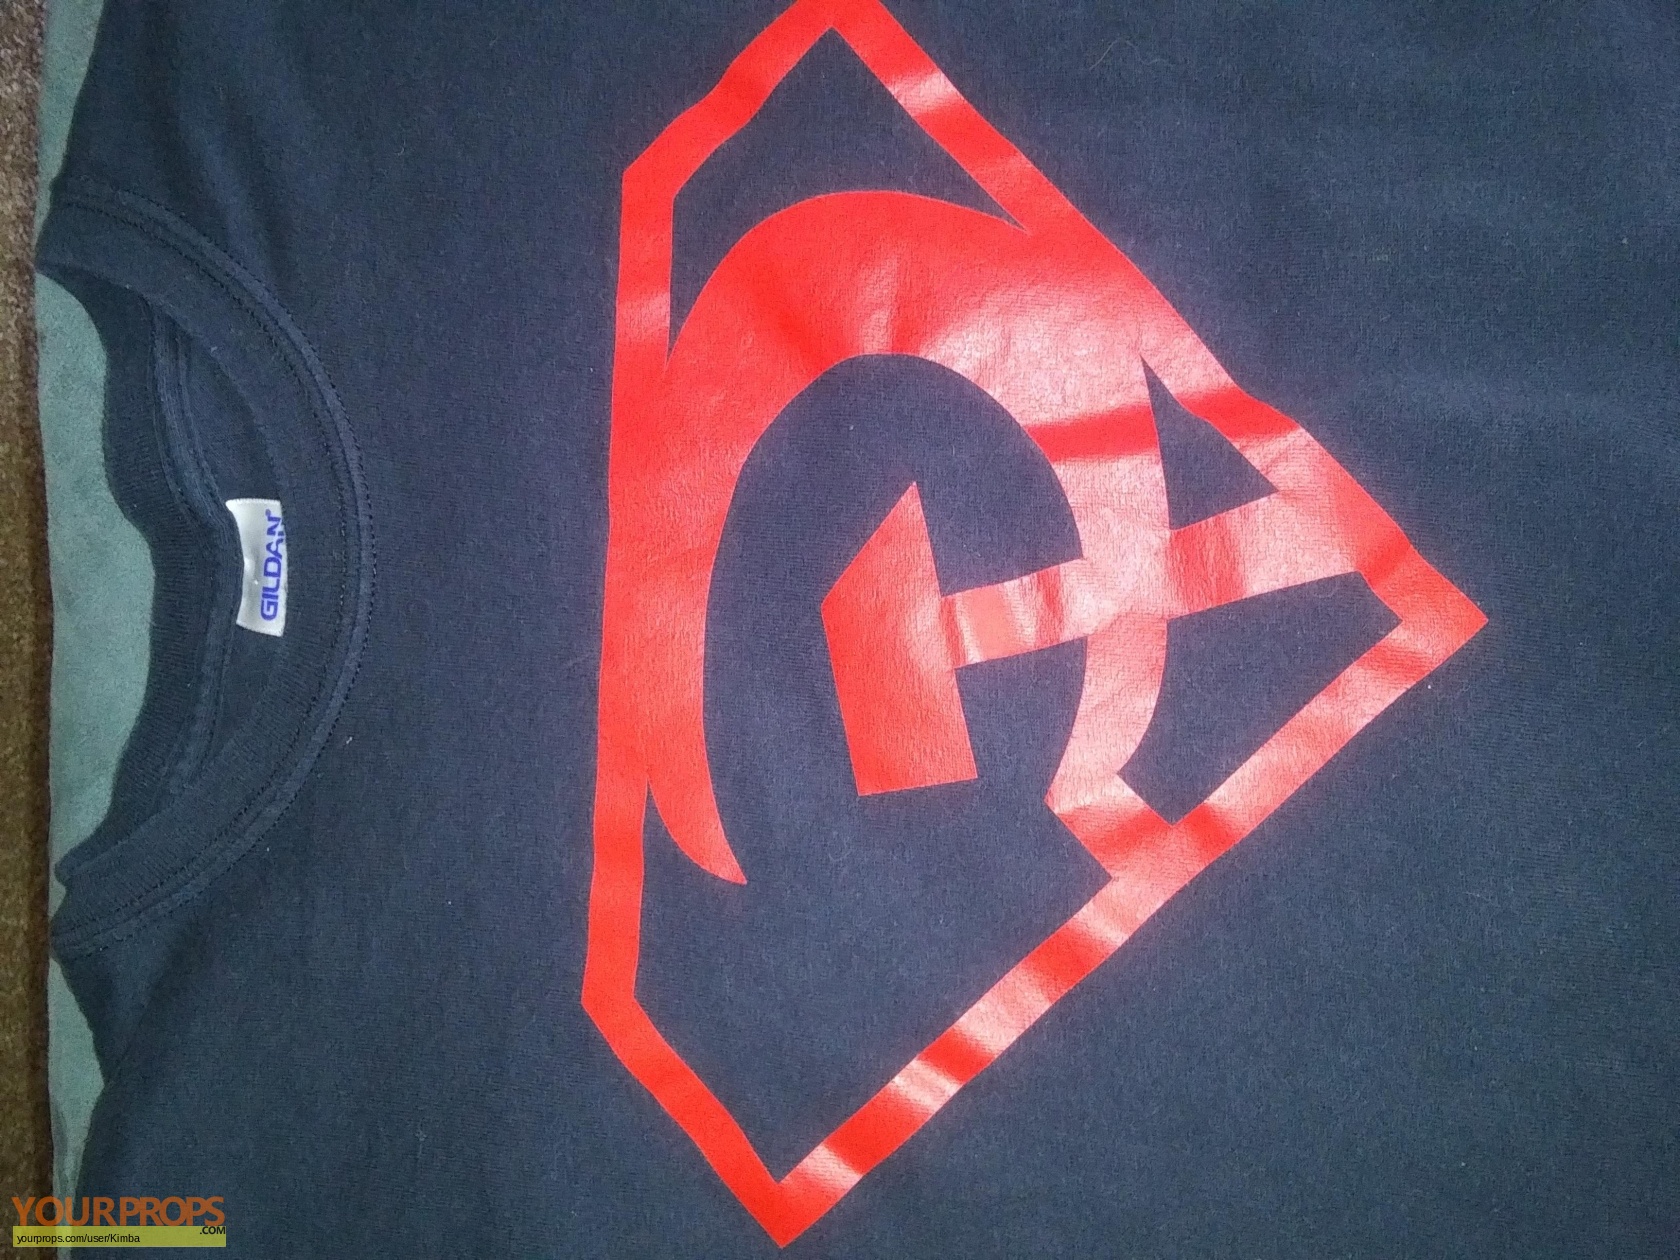 Supergirl Red Daughter 4th season crew Gift shirt original film-crew item